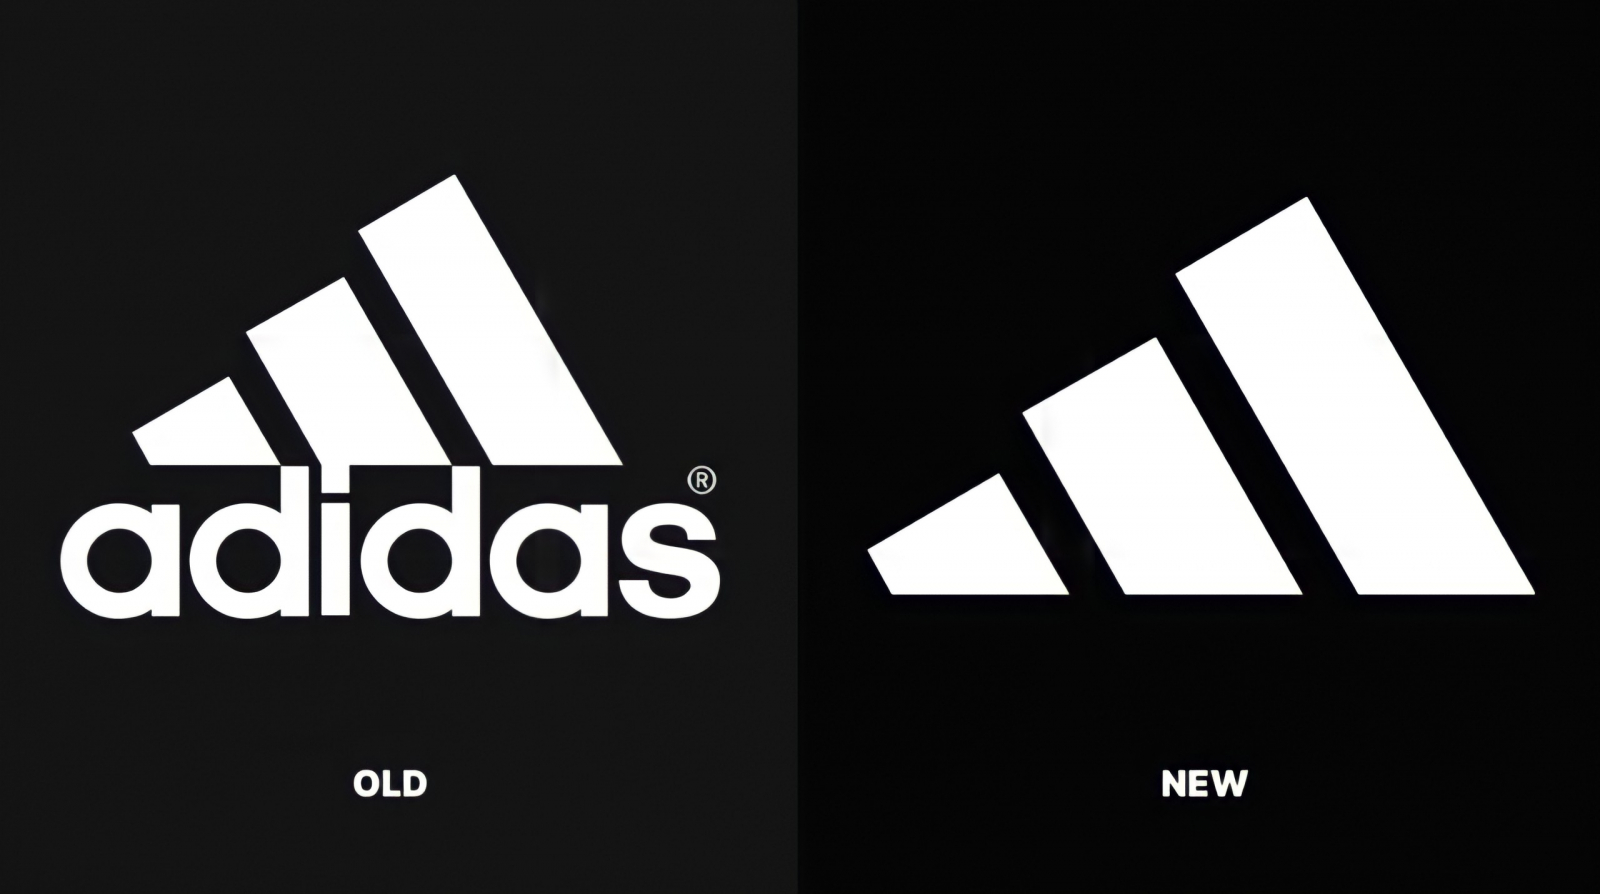 Adidas New logo